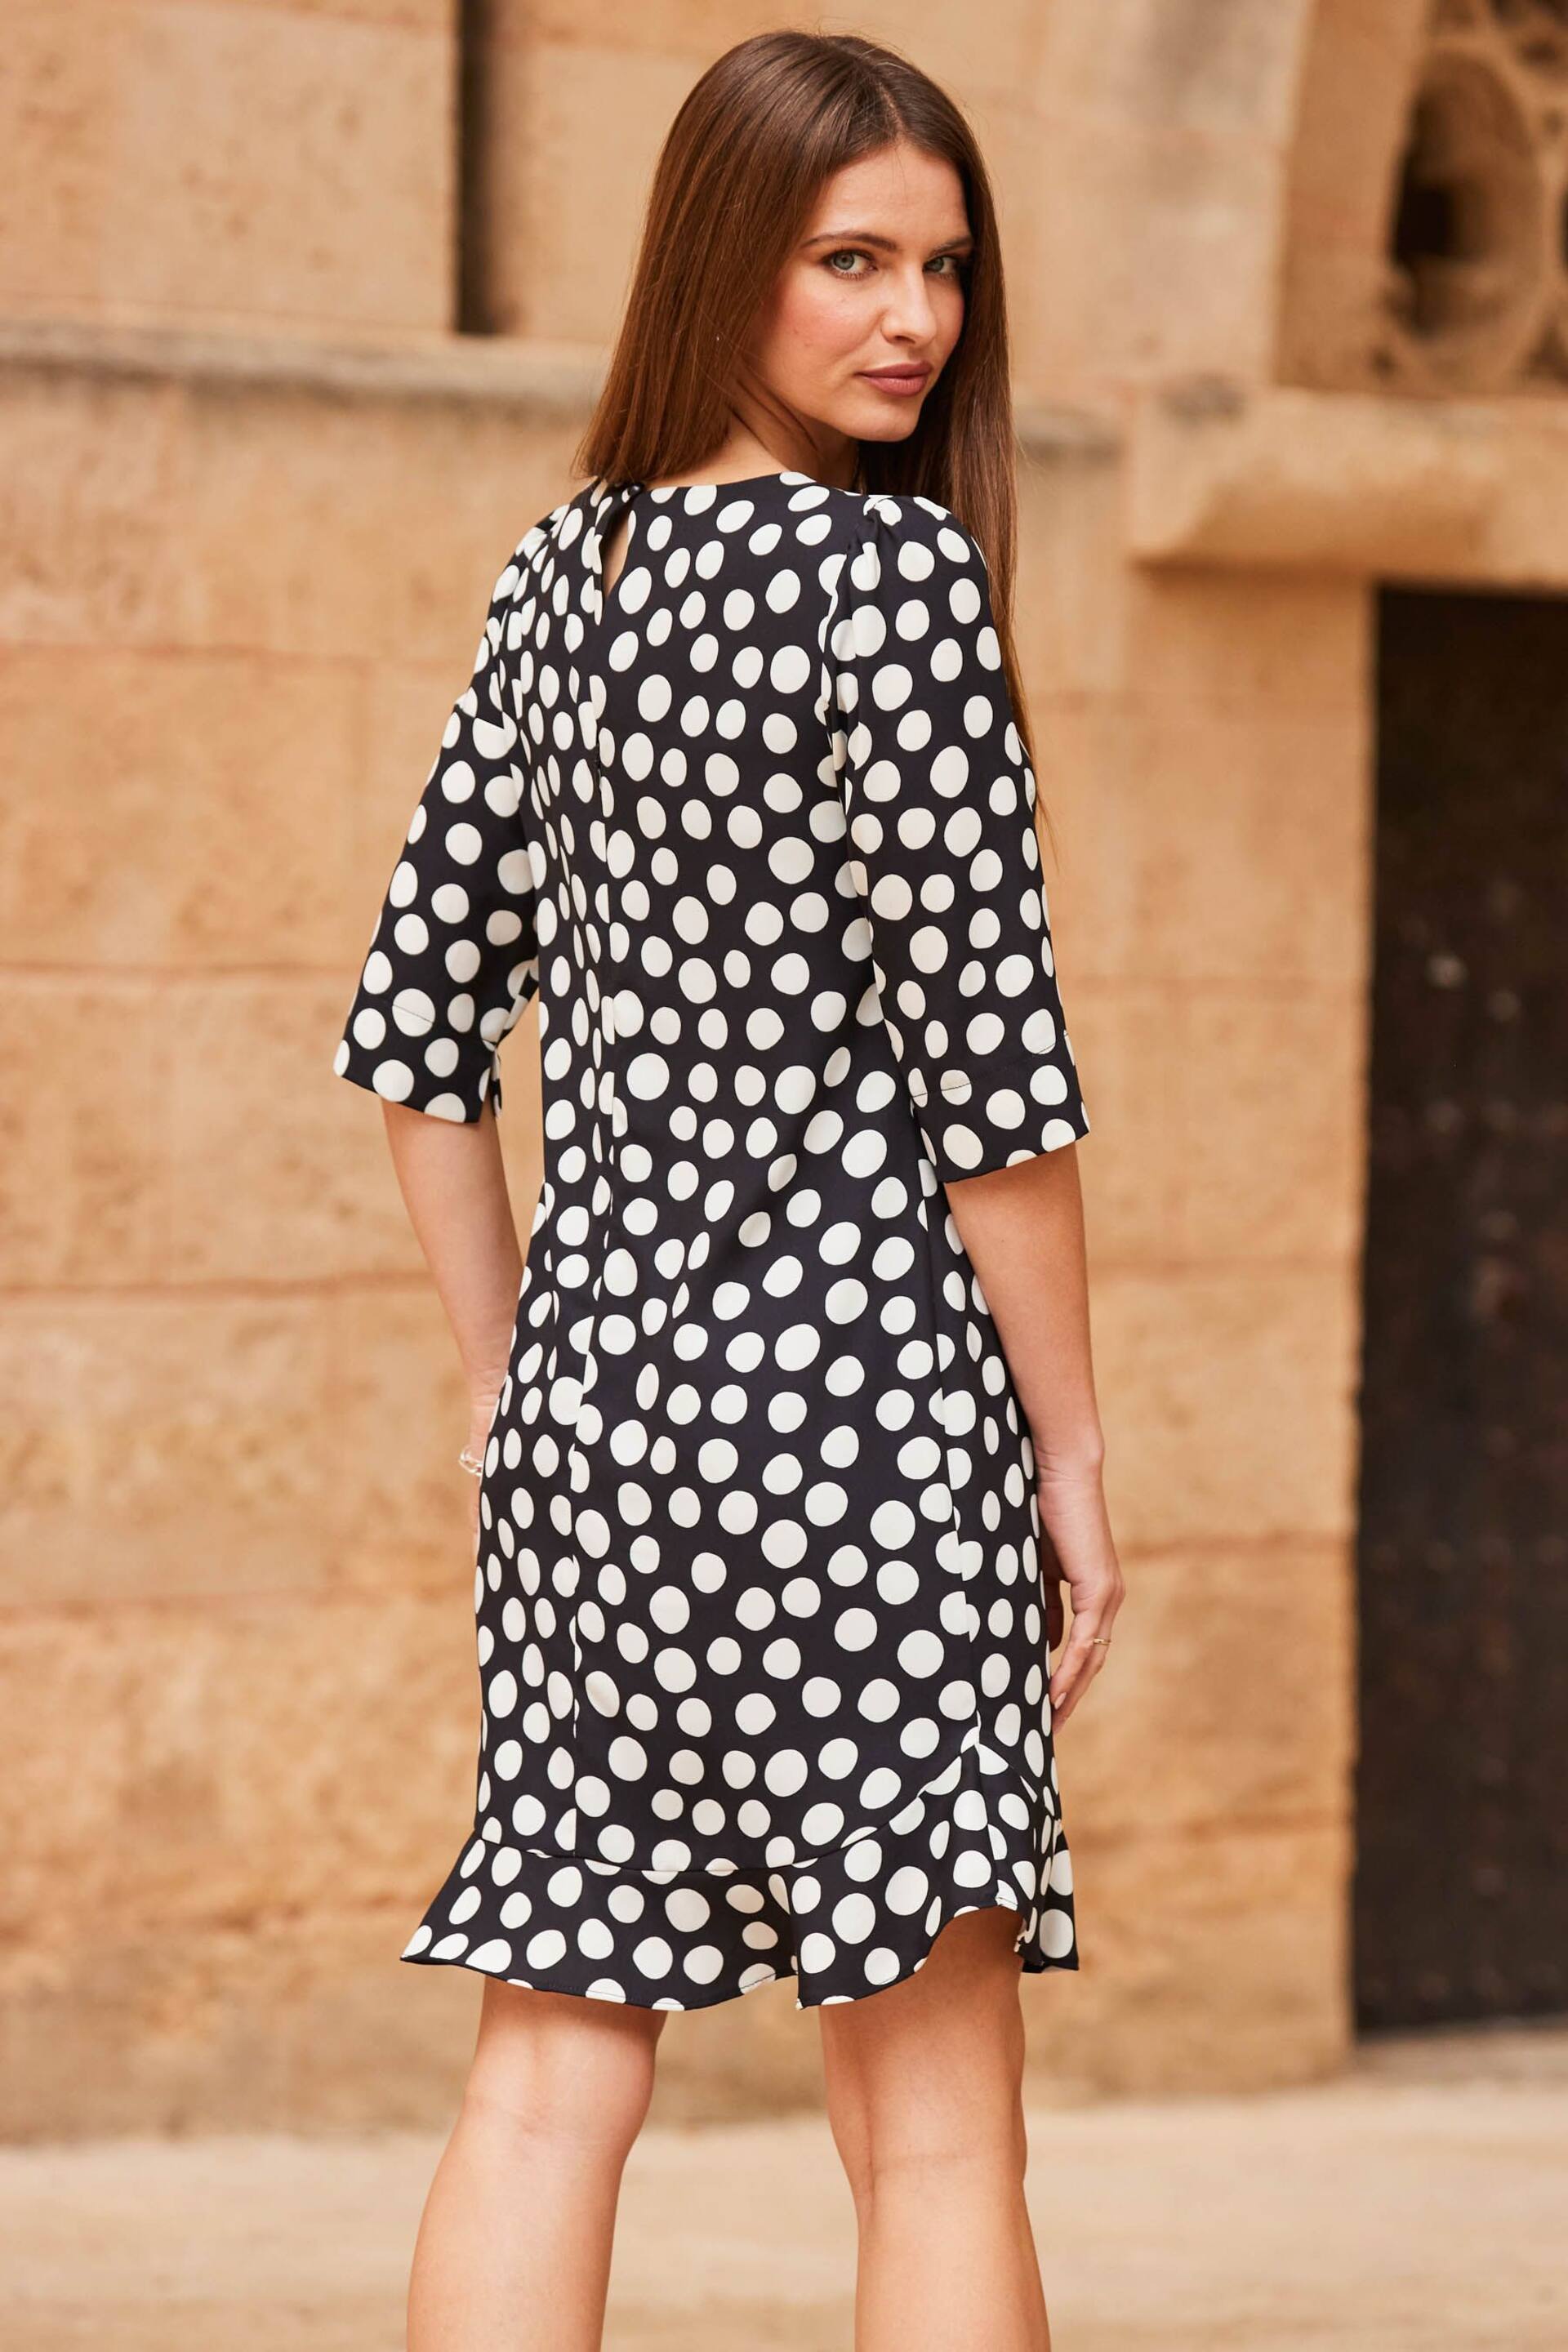 Sosandar Black Spot Print Ruffle Hem Shift Dress - Image 2 of 3